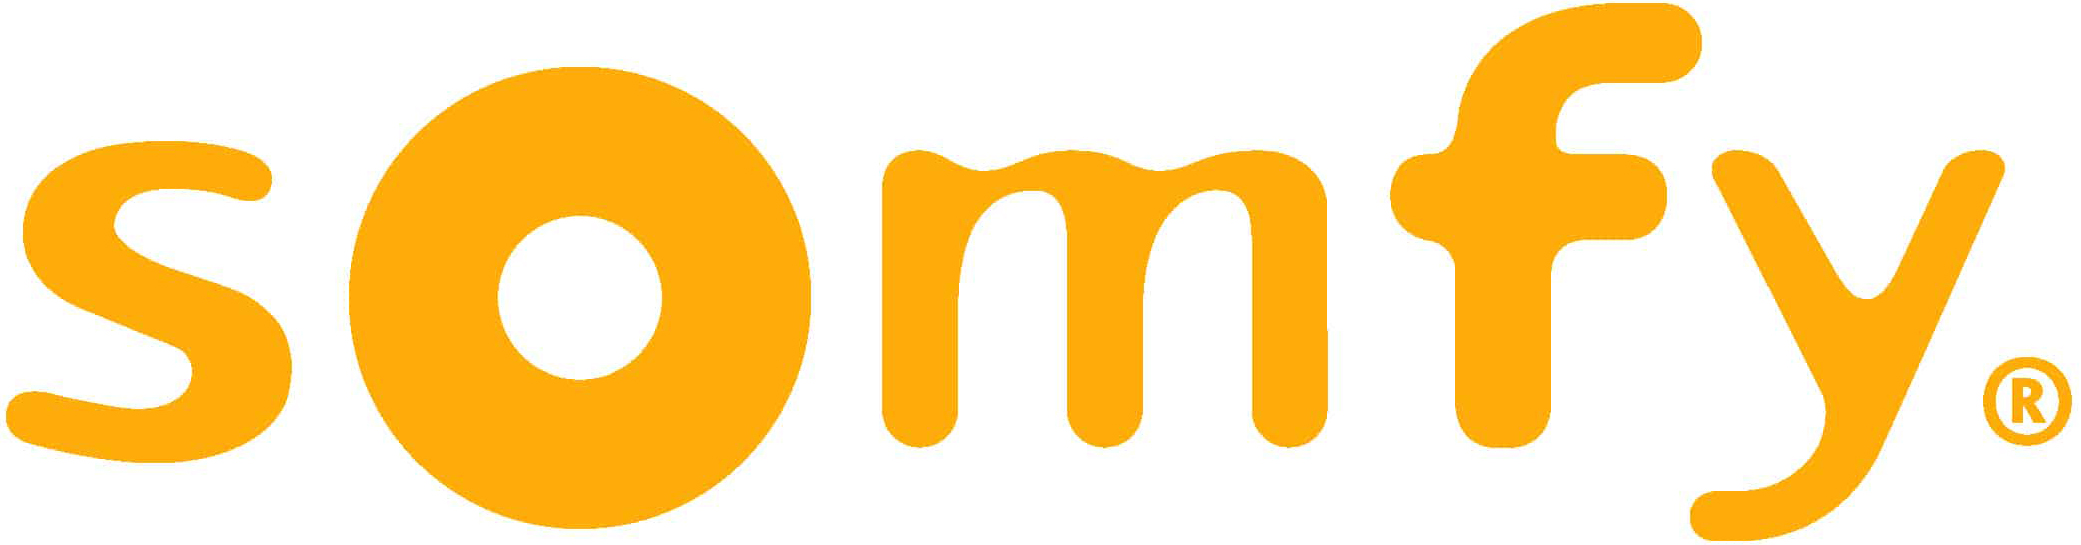 logo-partenaire-somfy